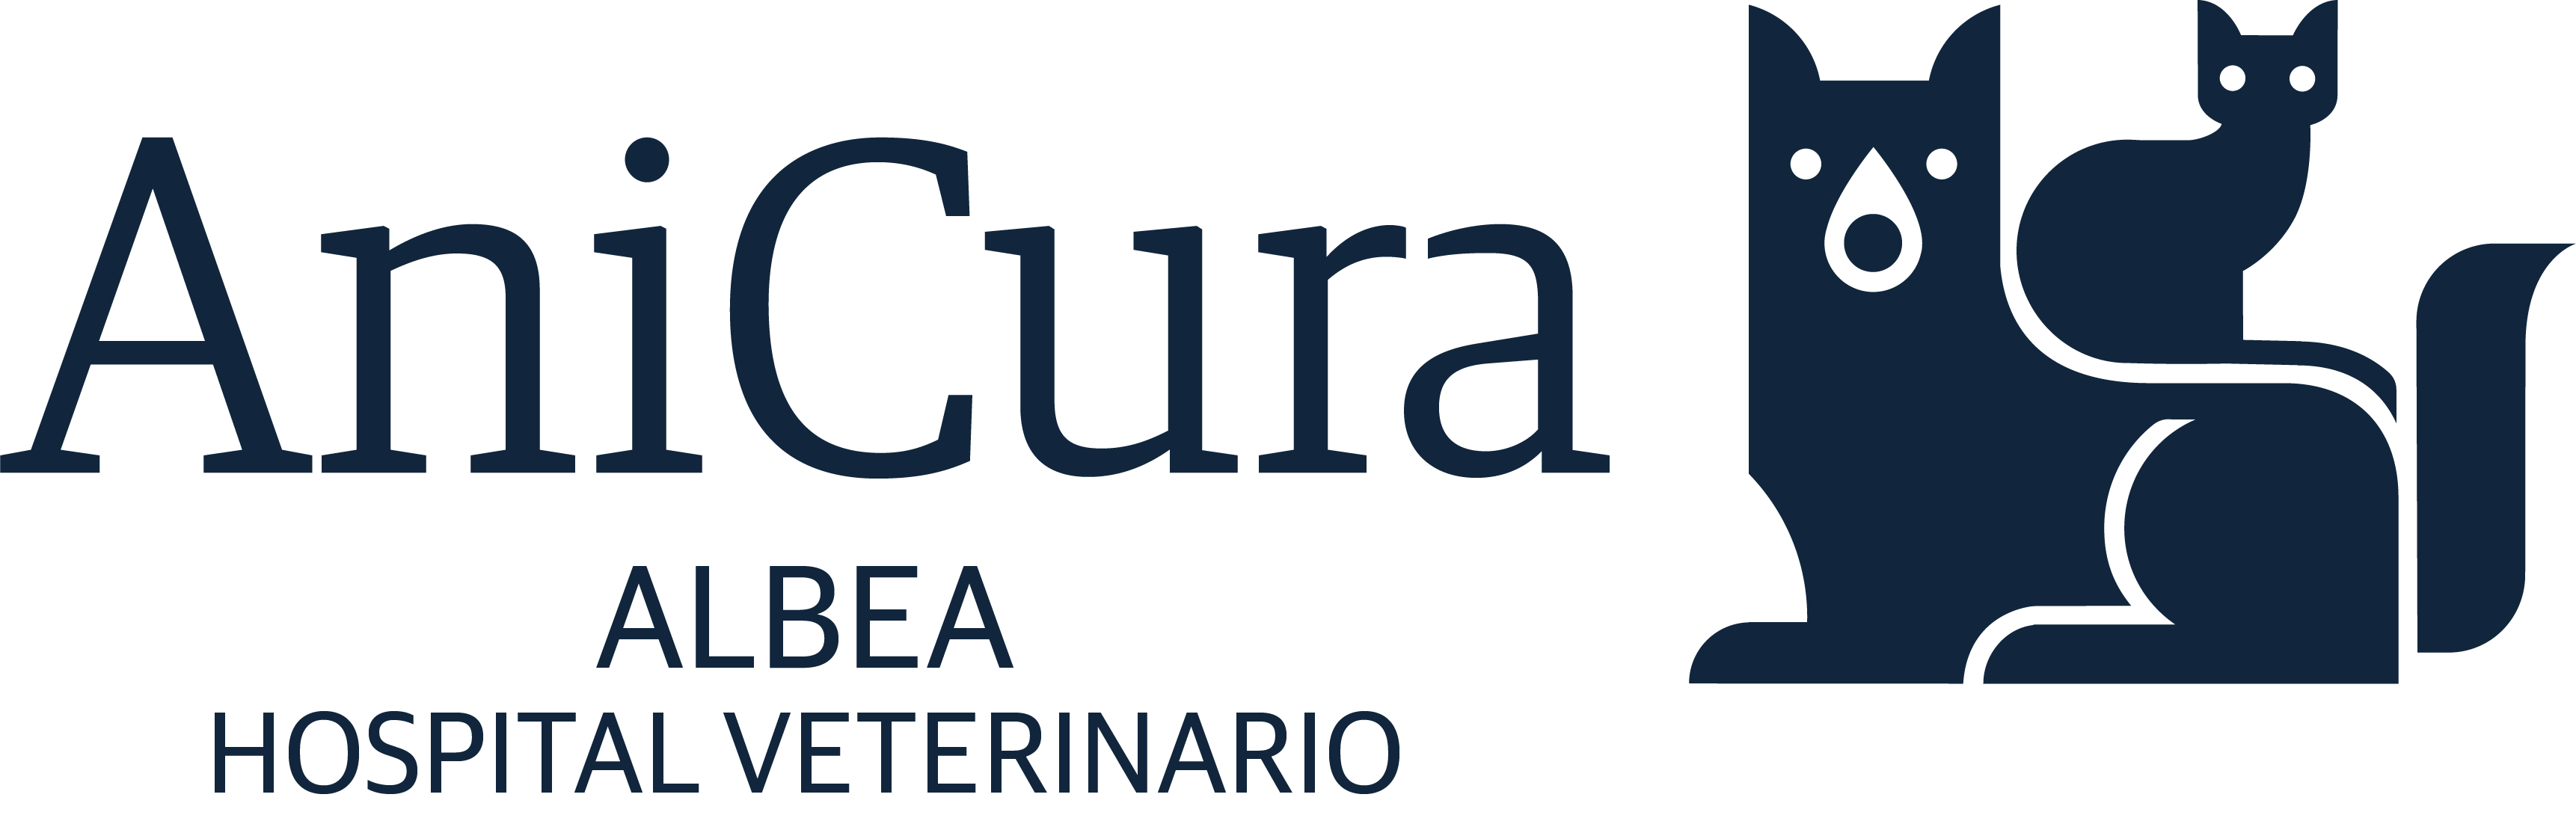 AniCura Albea Hospital Veterinario logo